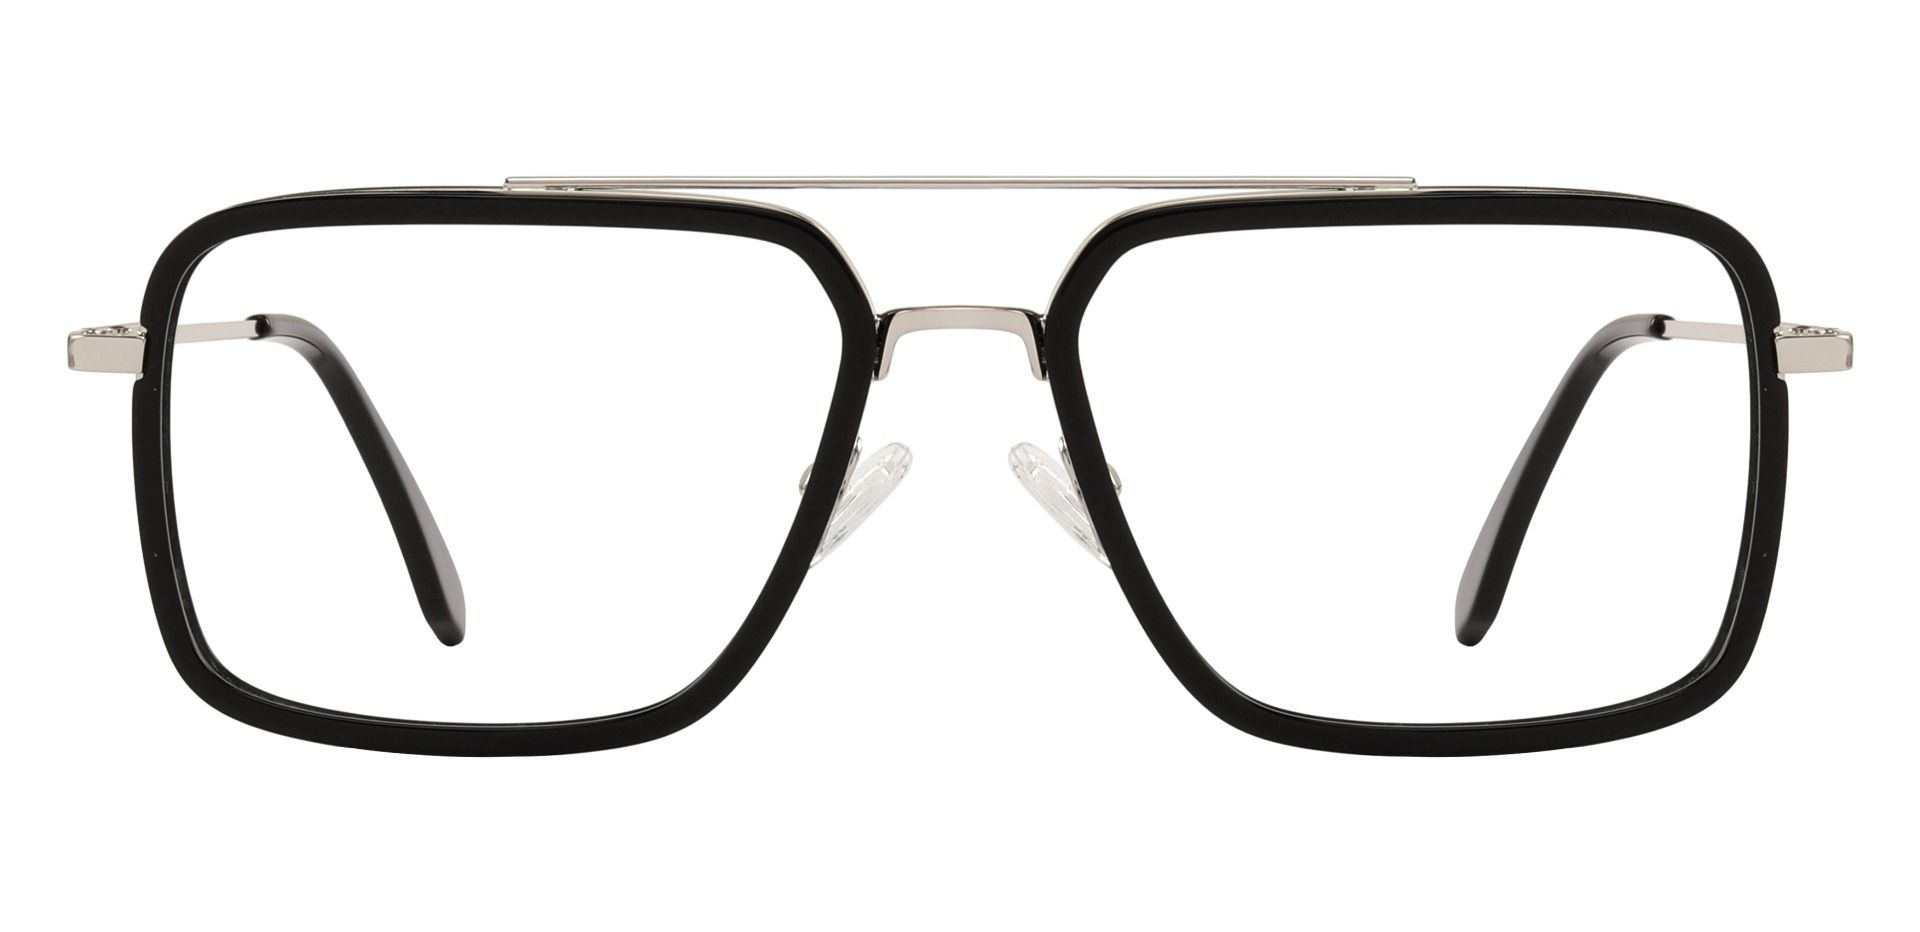 Sorrento Aviator Prescription Glasses - Black | Men's Eyeglasses ...